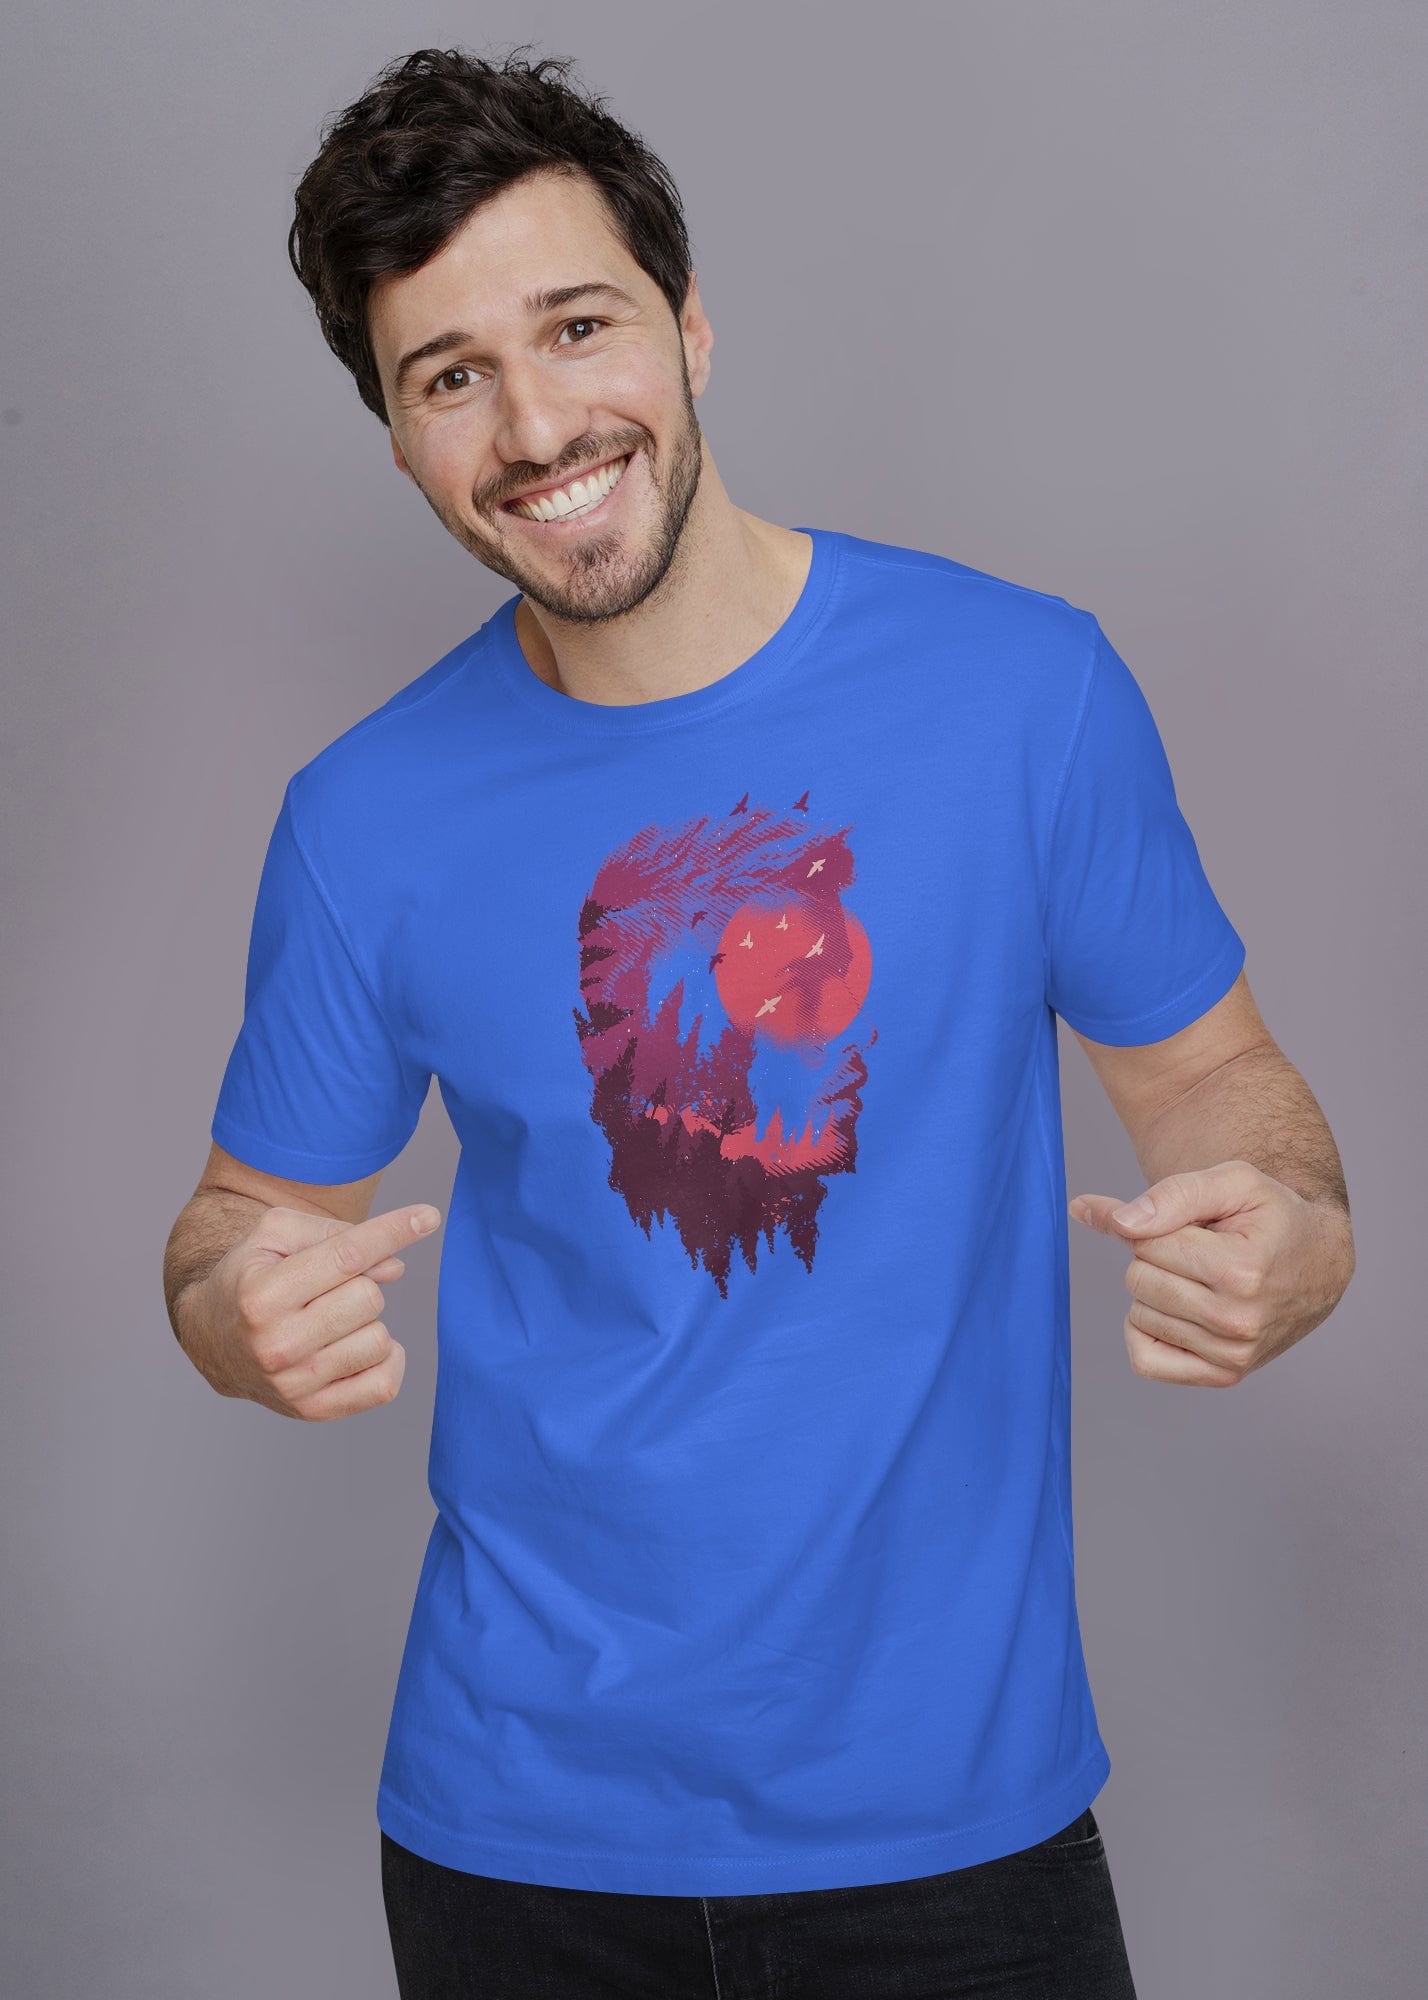 Head Forest Printed Half Sleeve Premium Cotton T-shirt For Men